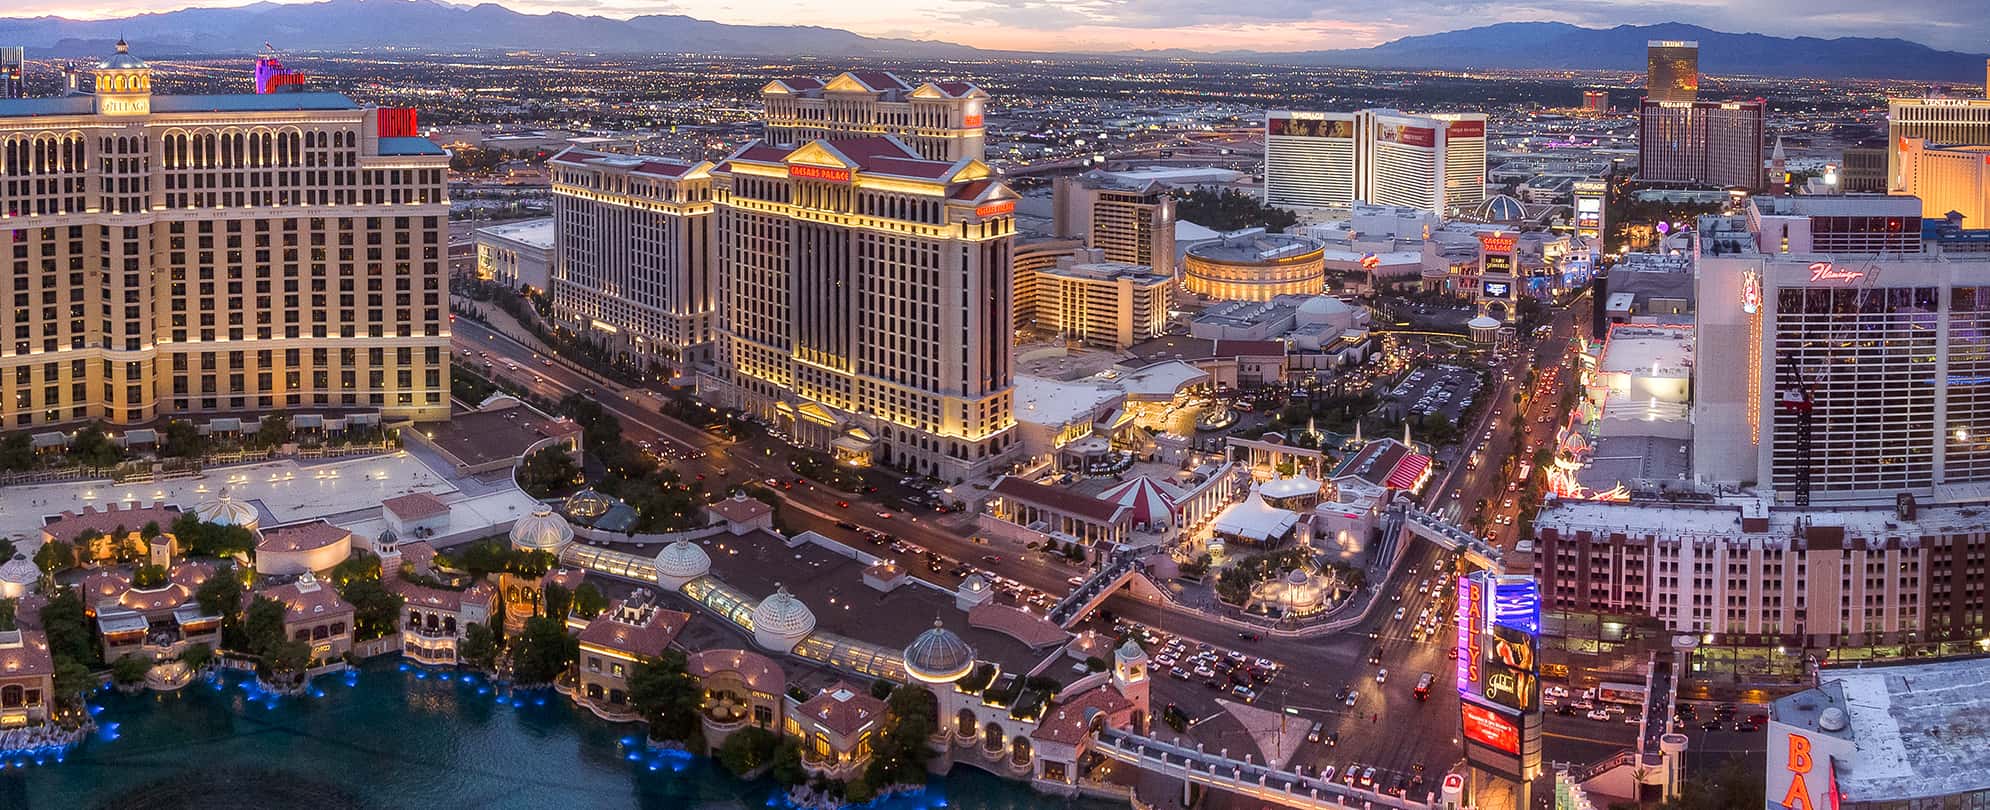 Caesar's Palace and the Las Vegas Strip lit up at sunset.